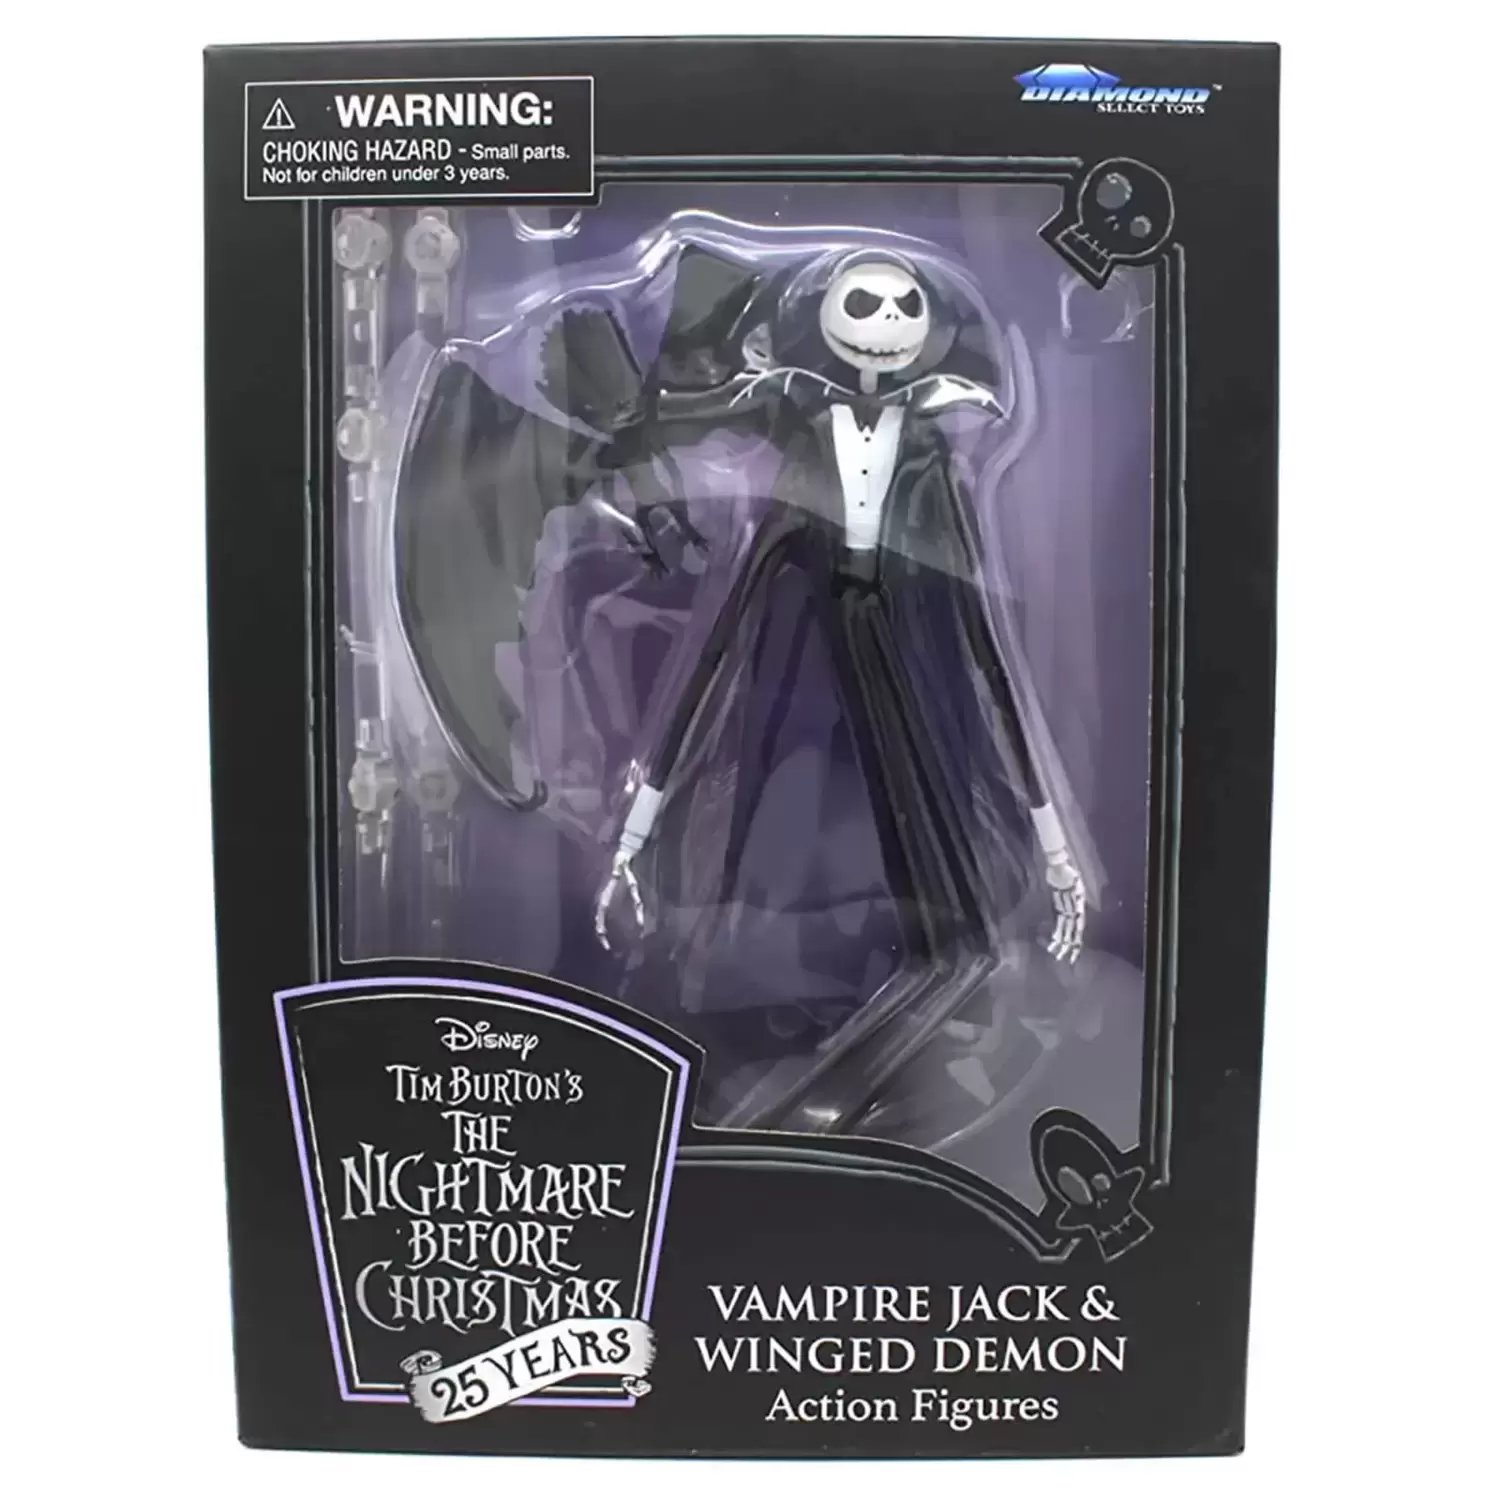 The Nightmare Before Christmas - Diamond Select - Vampire Jack & Winged Demon